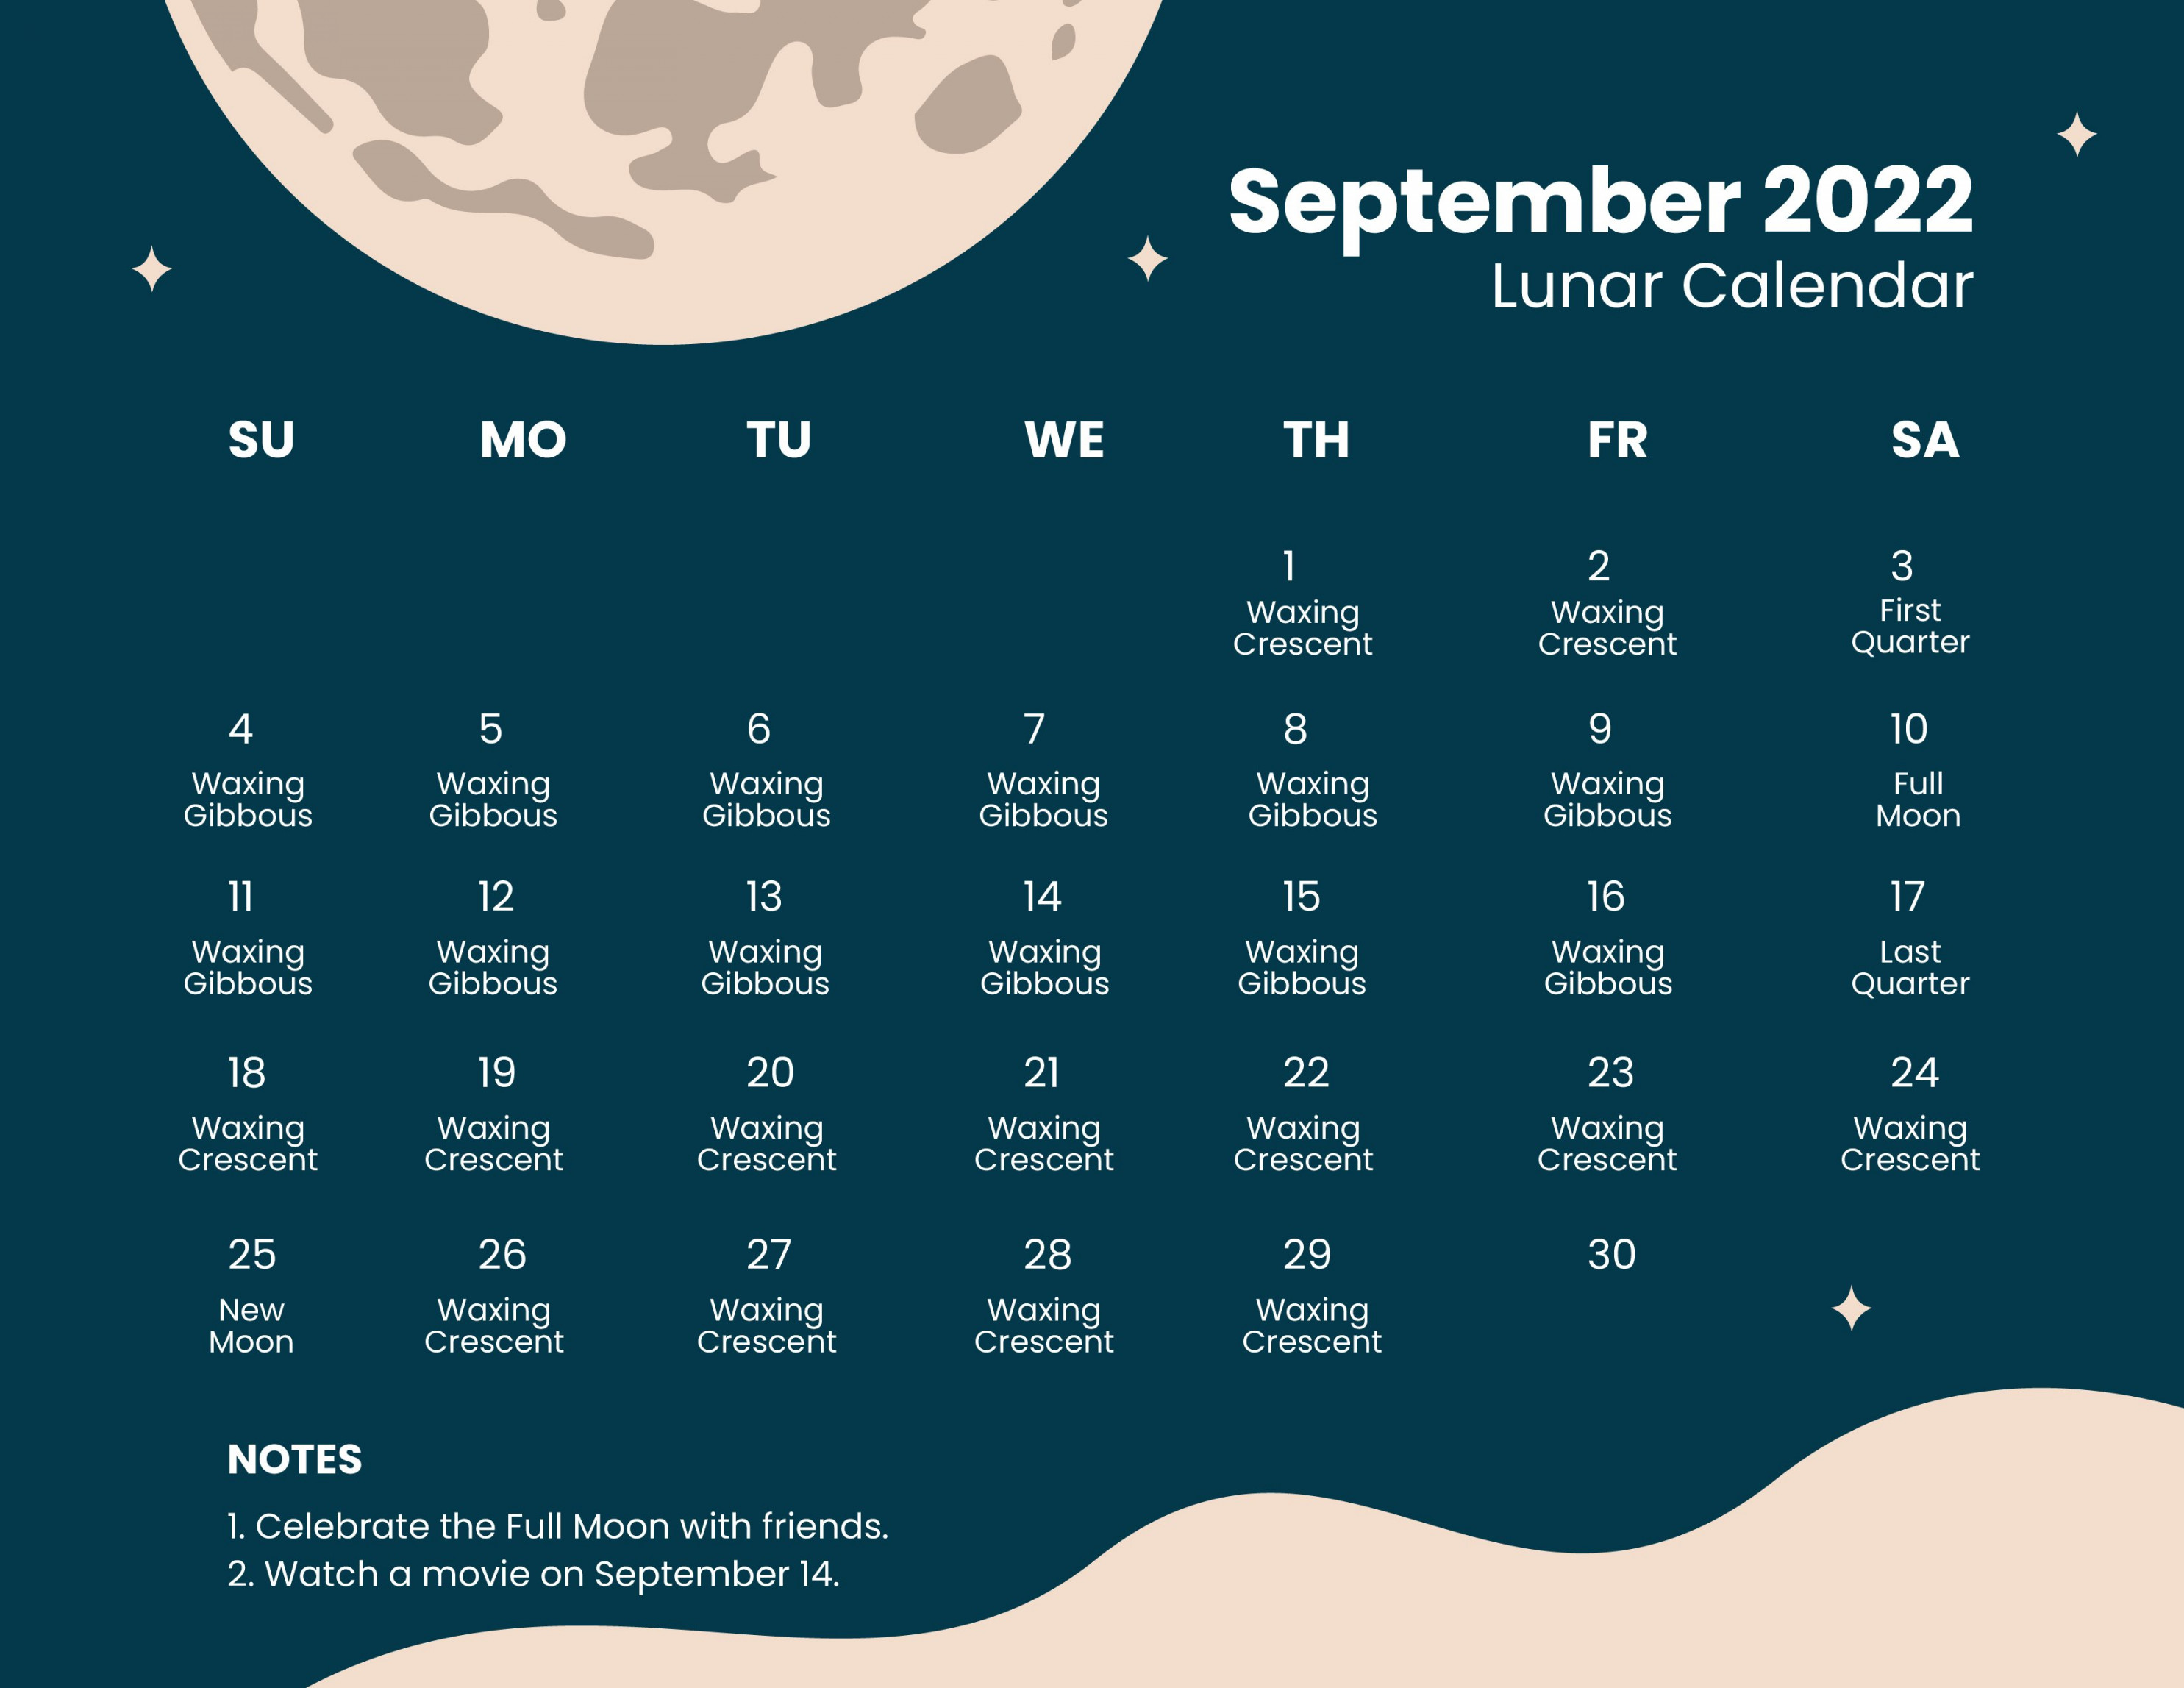 FREE Lunar Calendar Template - Download in Word, Google Docs